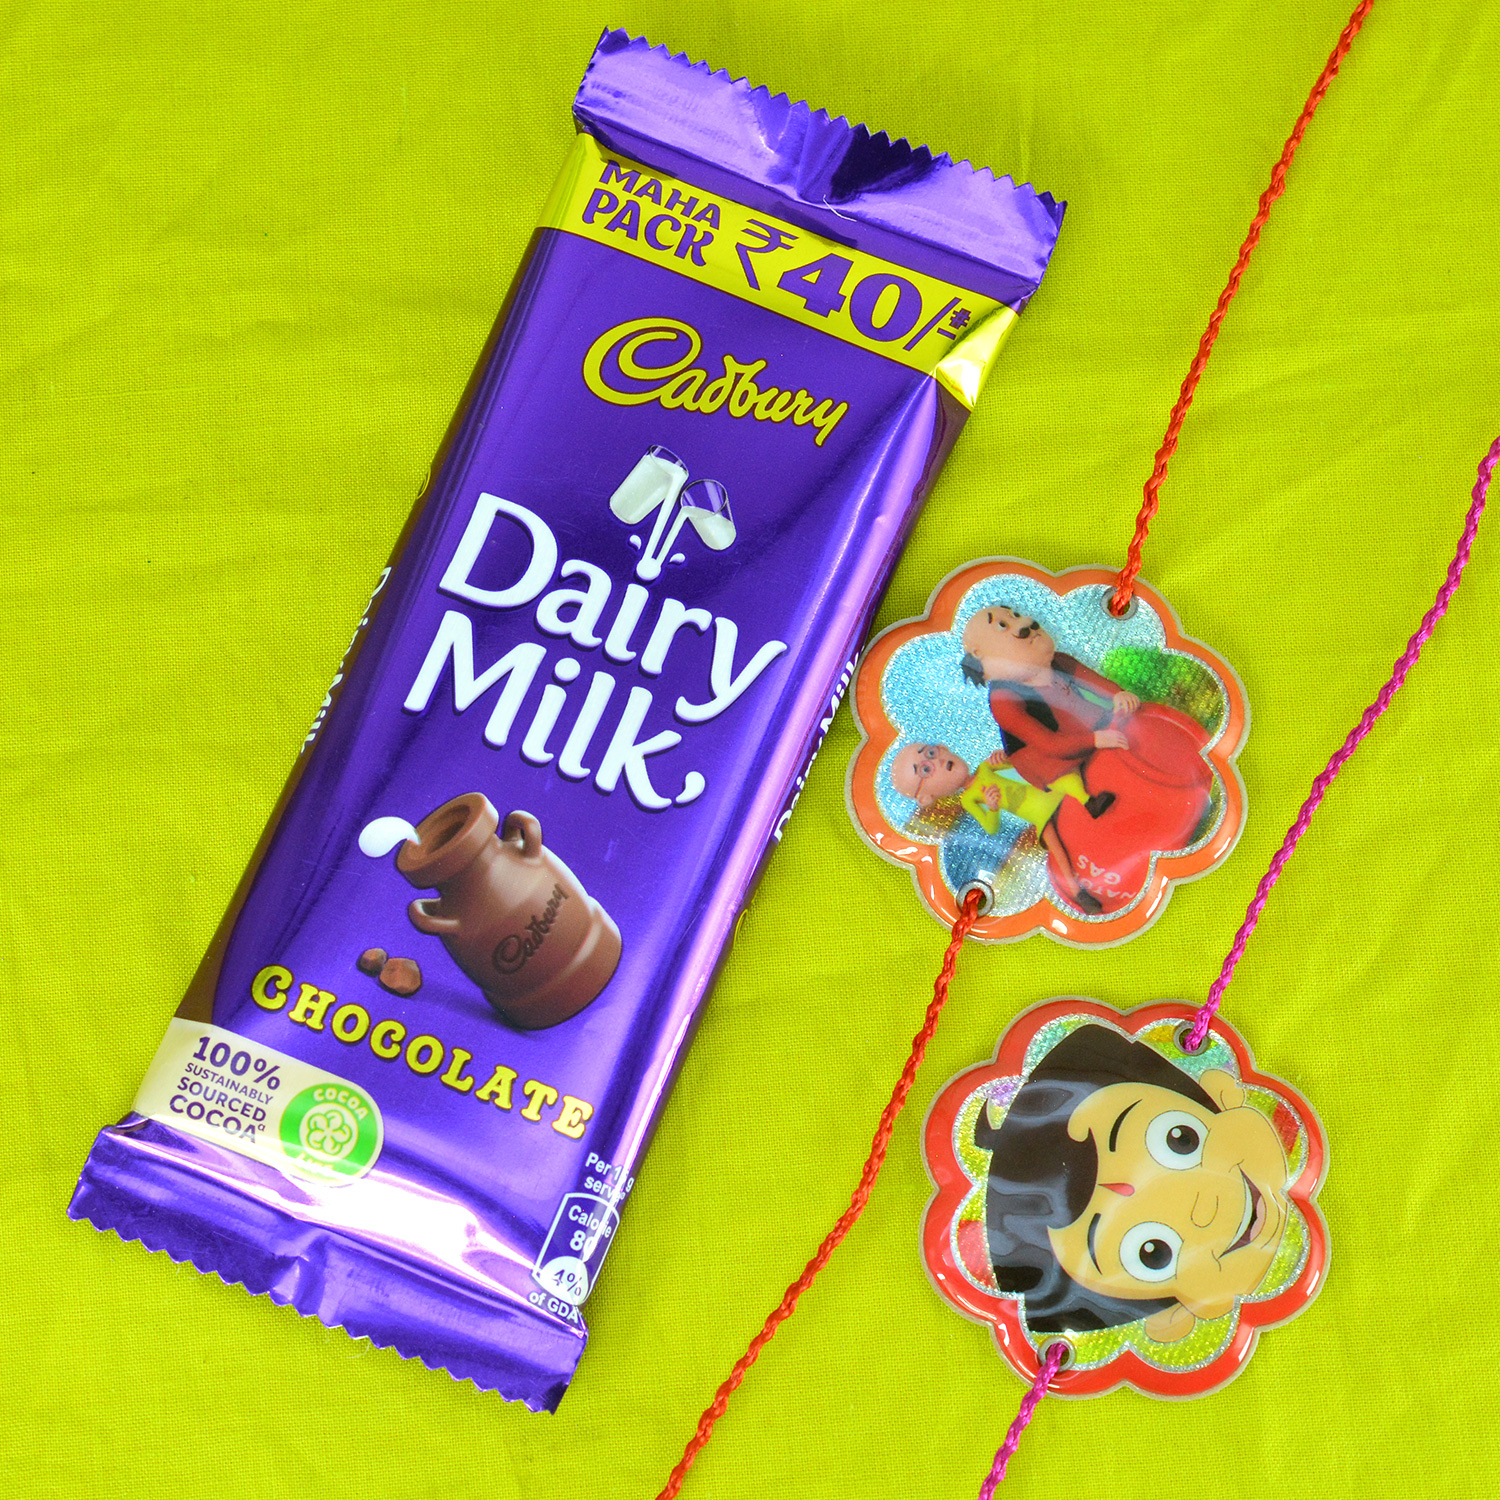 Small Tasty Dairy Milk with 2 Cartoon Kid Rakhis